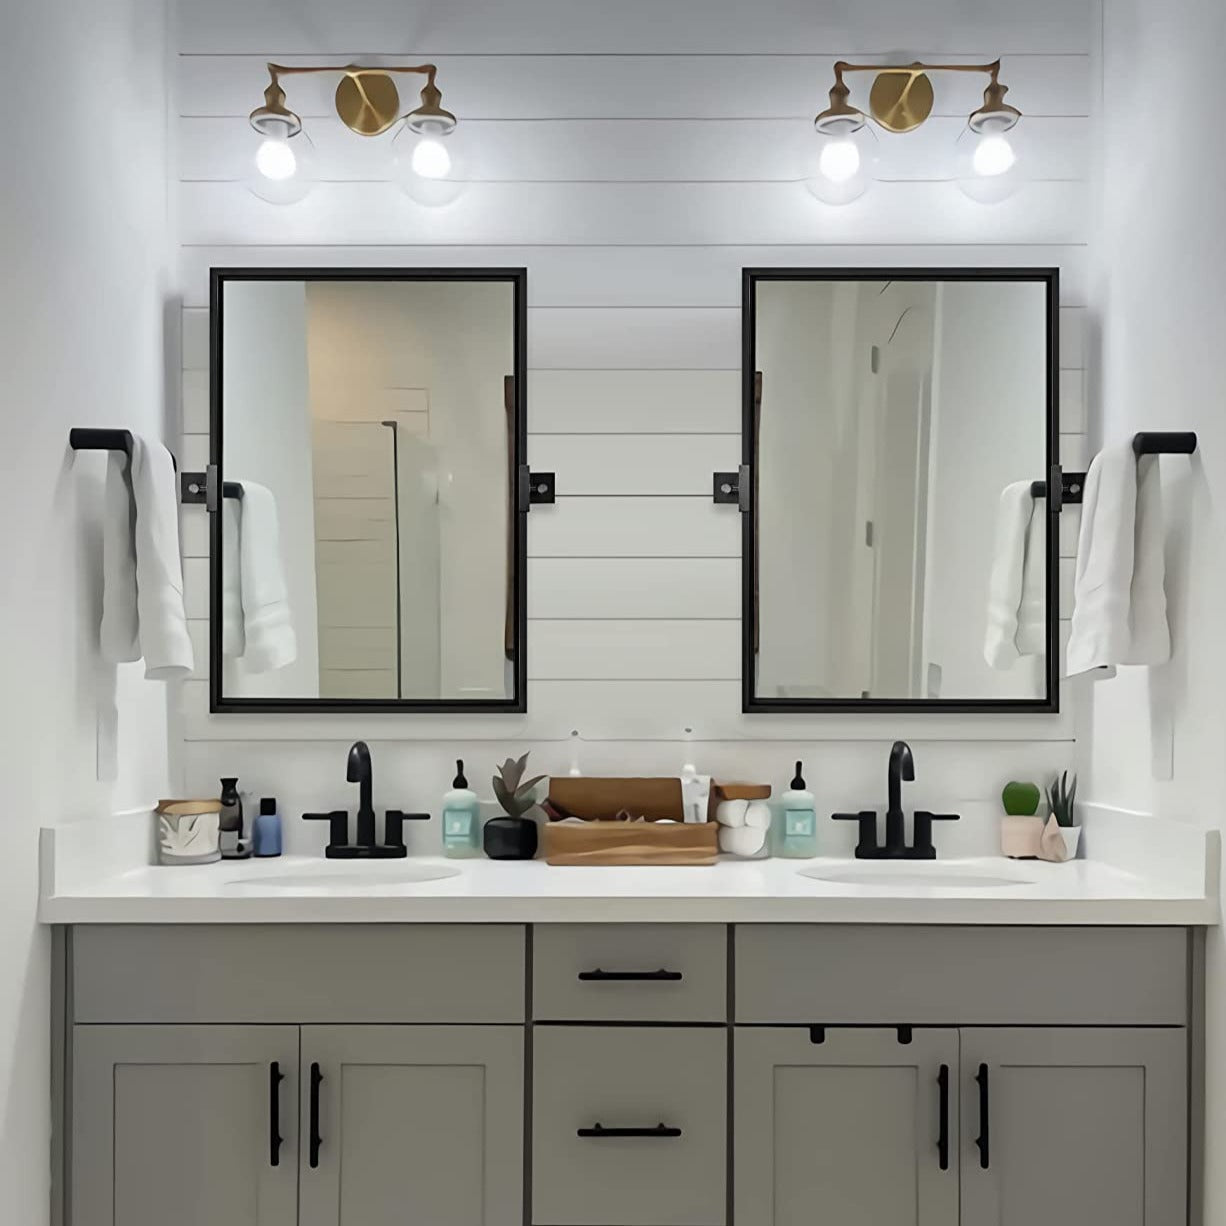 MOON MIRROR Black Pivot Swivel Titling Mirrors Farmhouse Bathroom Vanity Mirror Rectangle Wall Mirror| Wooden Mirror